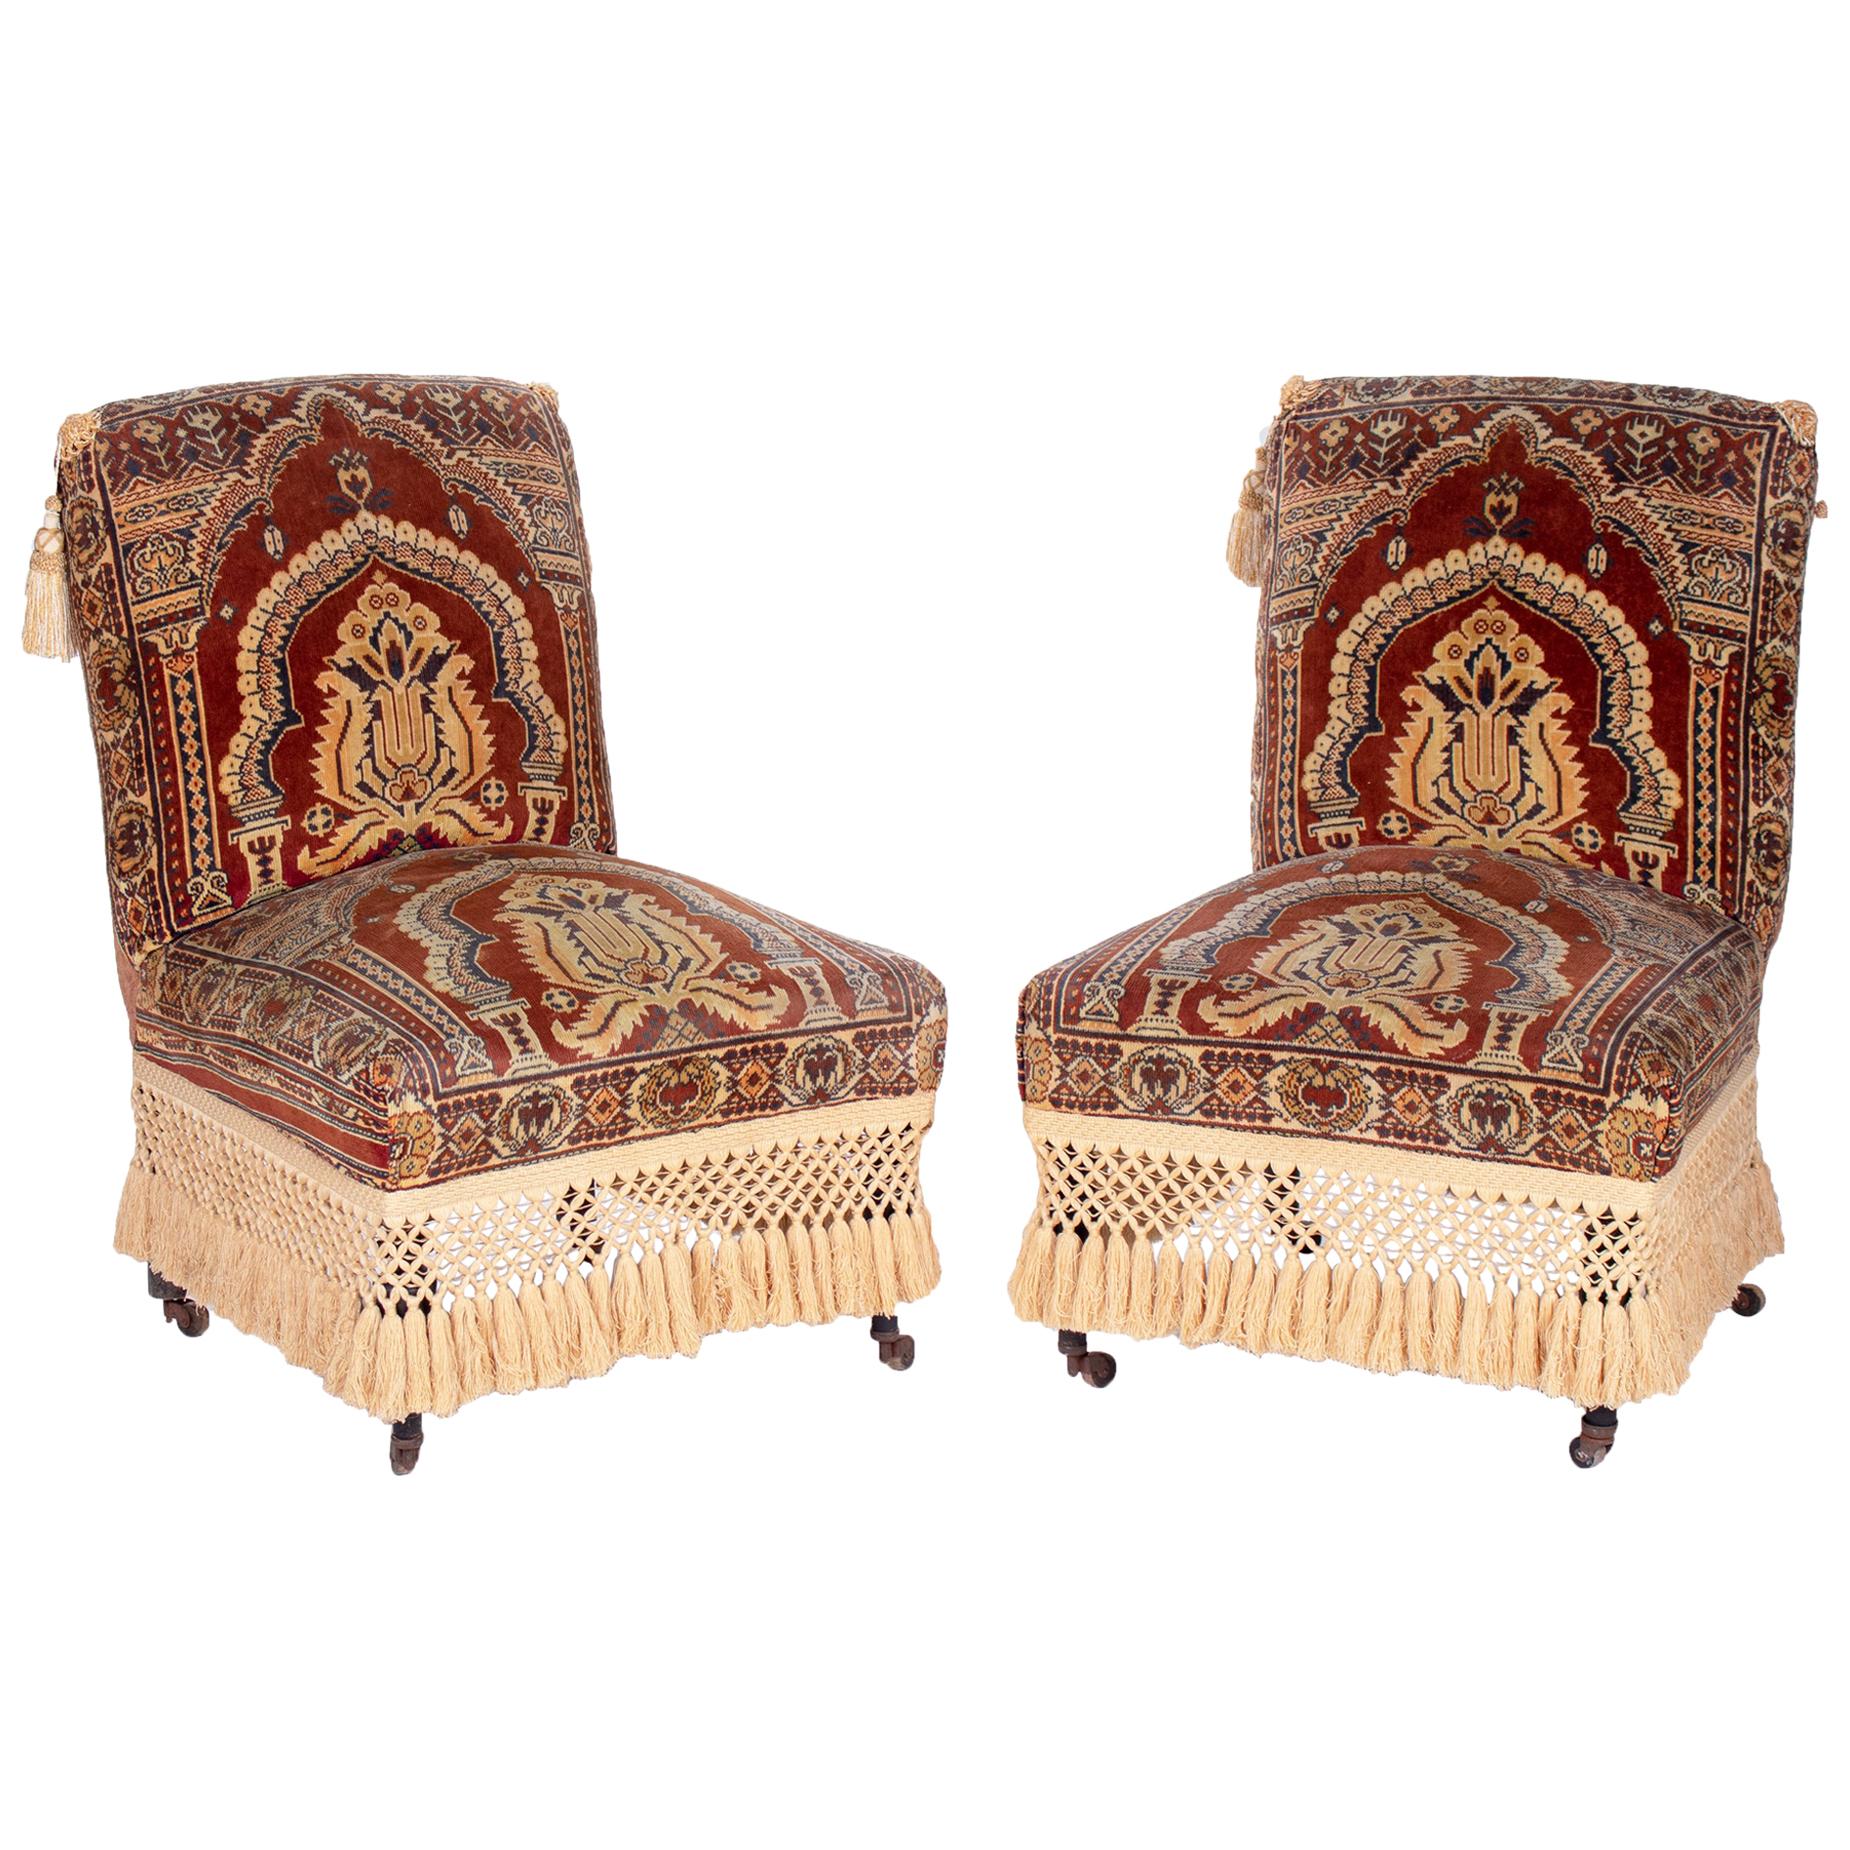 19th Century Pair of Turkish Upholstered Seats